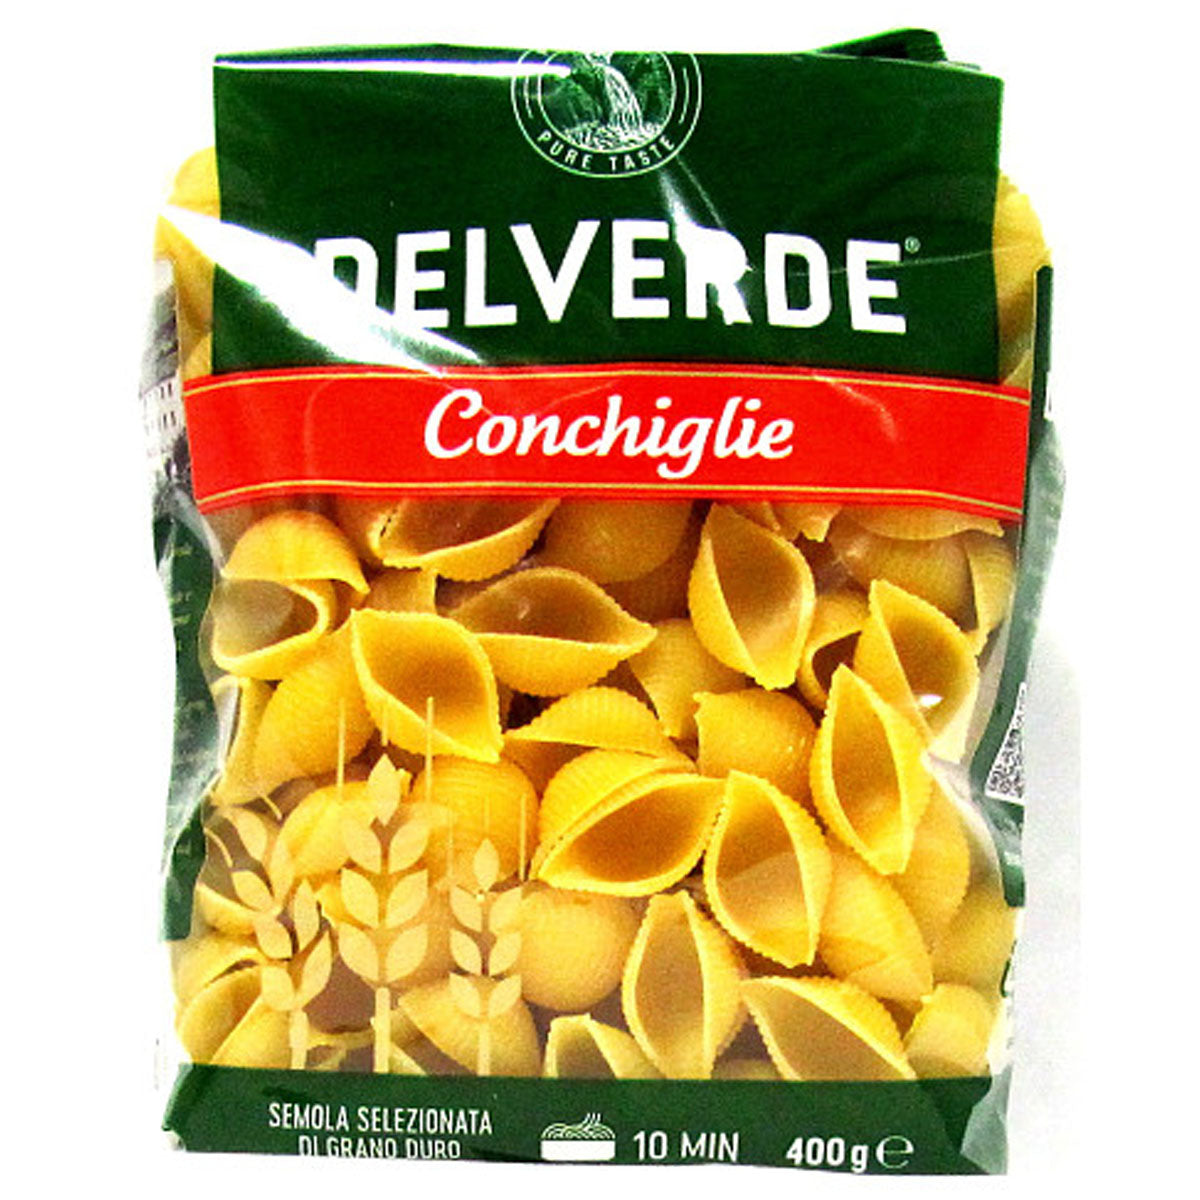 A bag of Del Verde - Conchiglie Pasta - 400g on a white background.